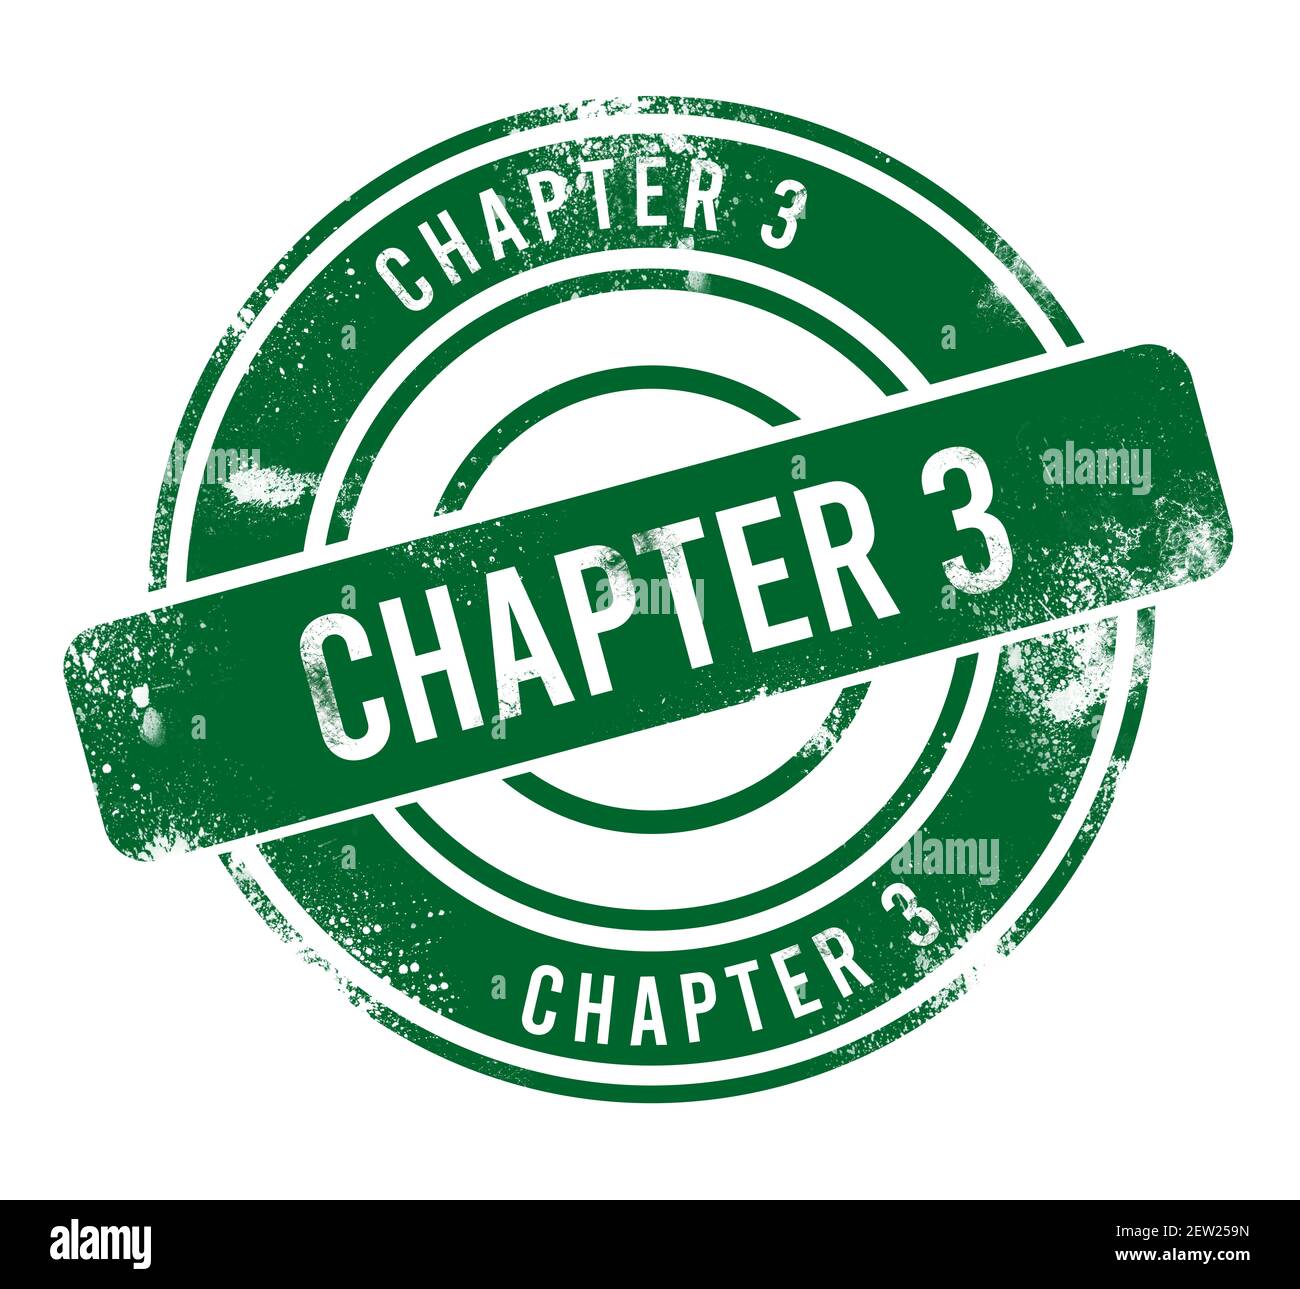 chapter 3 logo